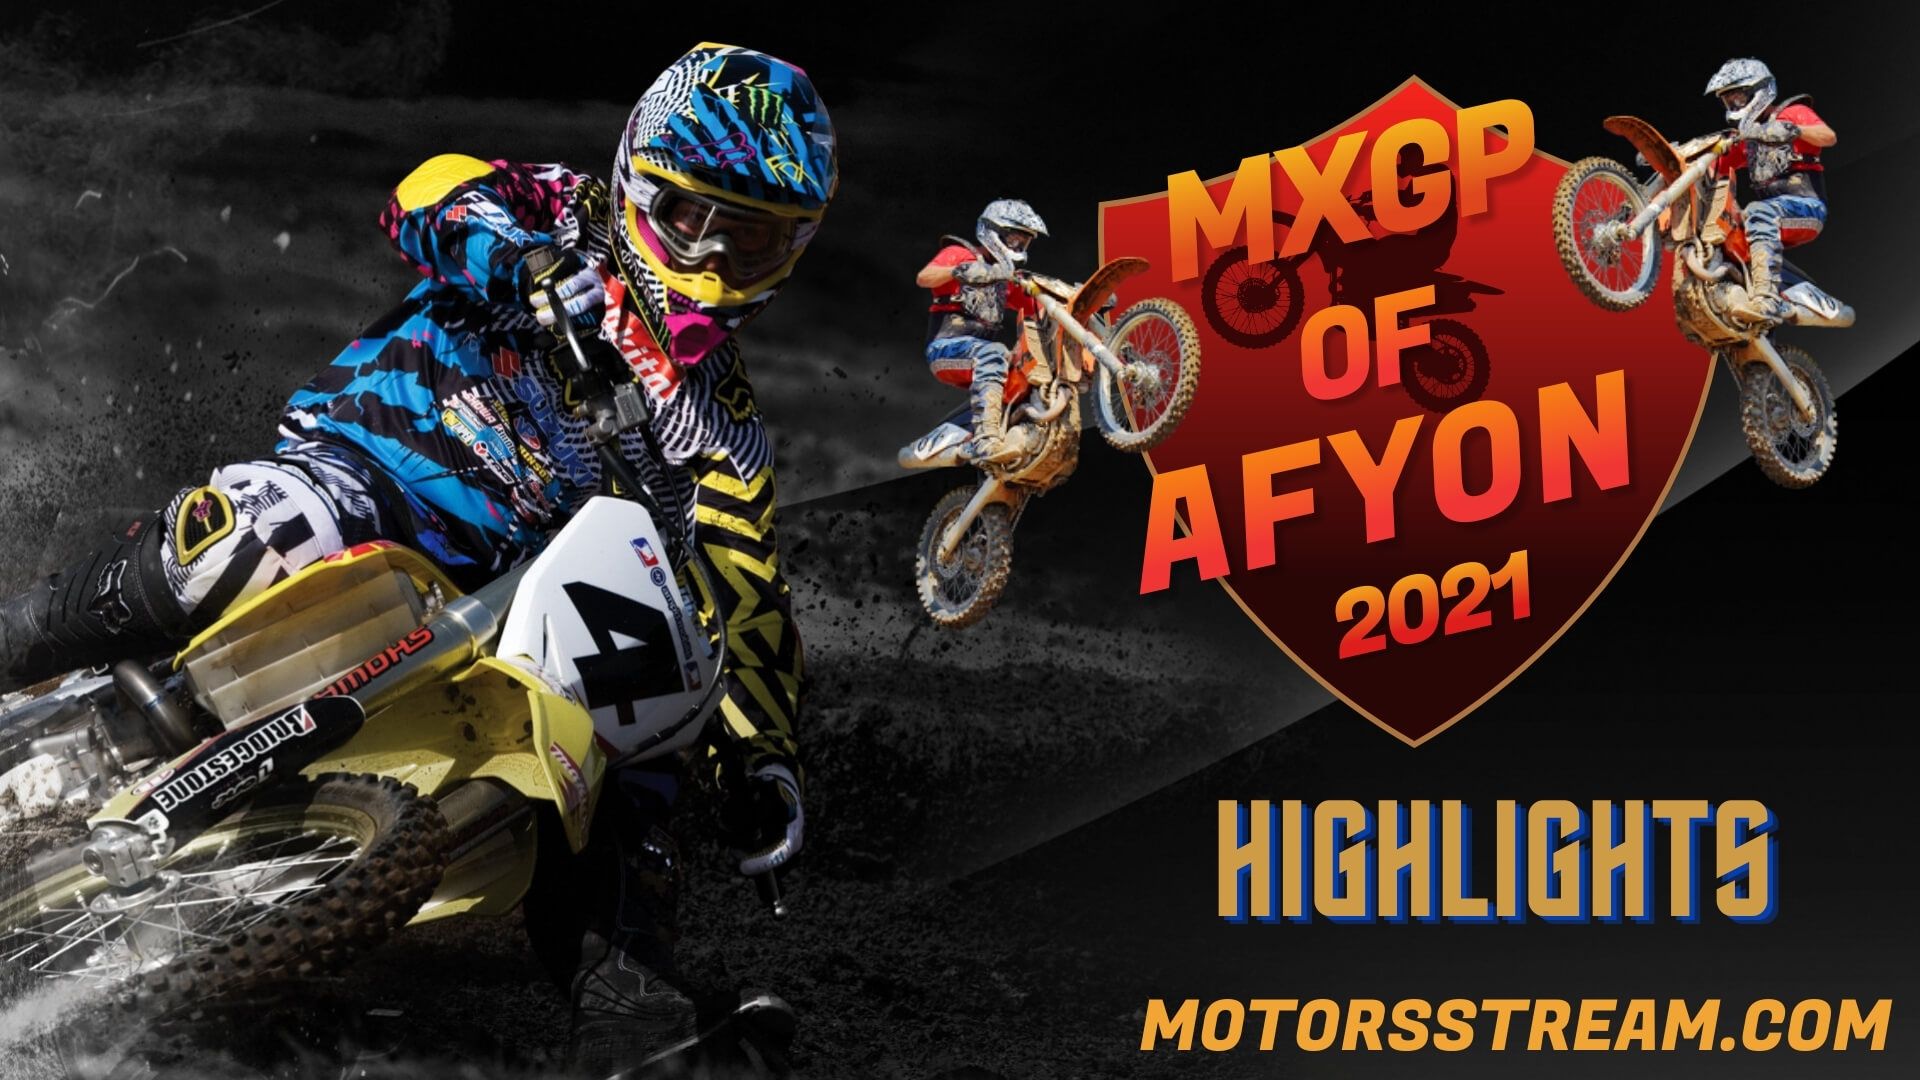 FIM Motocross Afyon Highlight 2021 MXGP